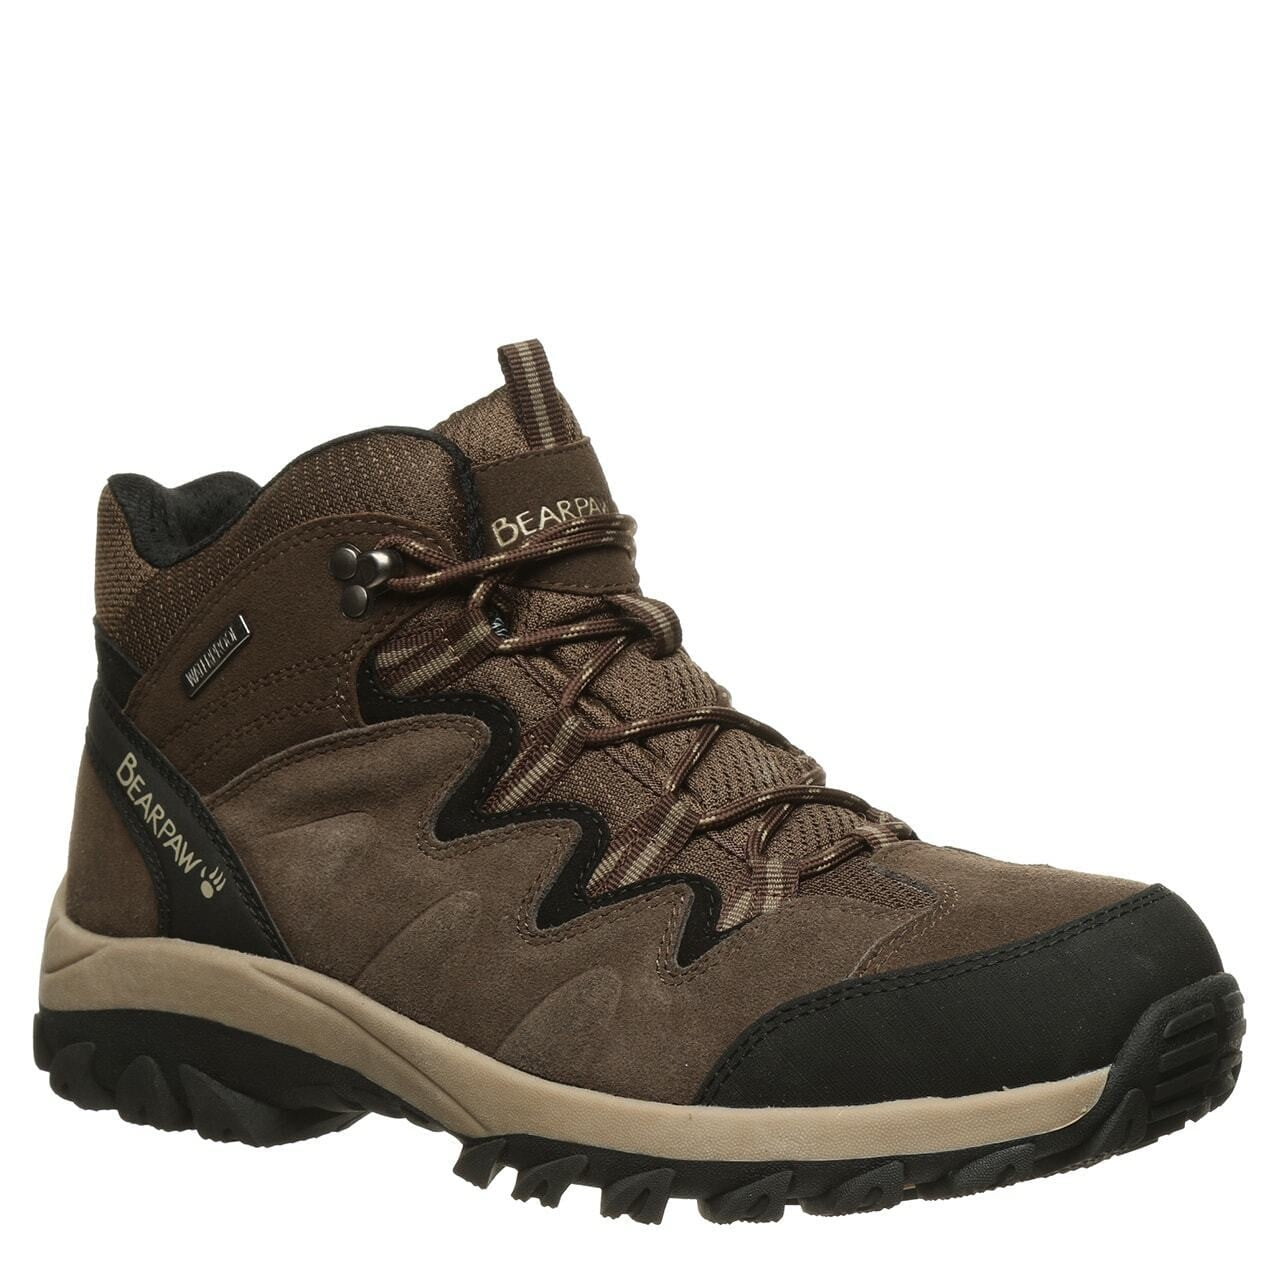 Bearpaw Men's Lars Hiking Shoes - Walmart.com